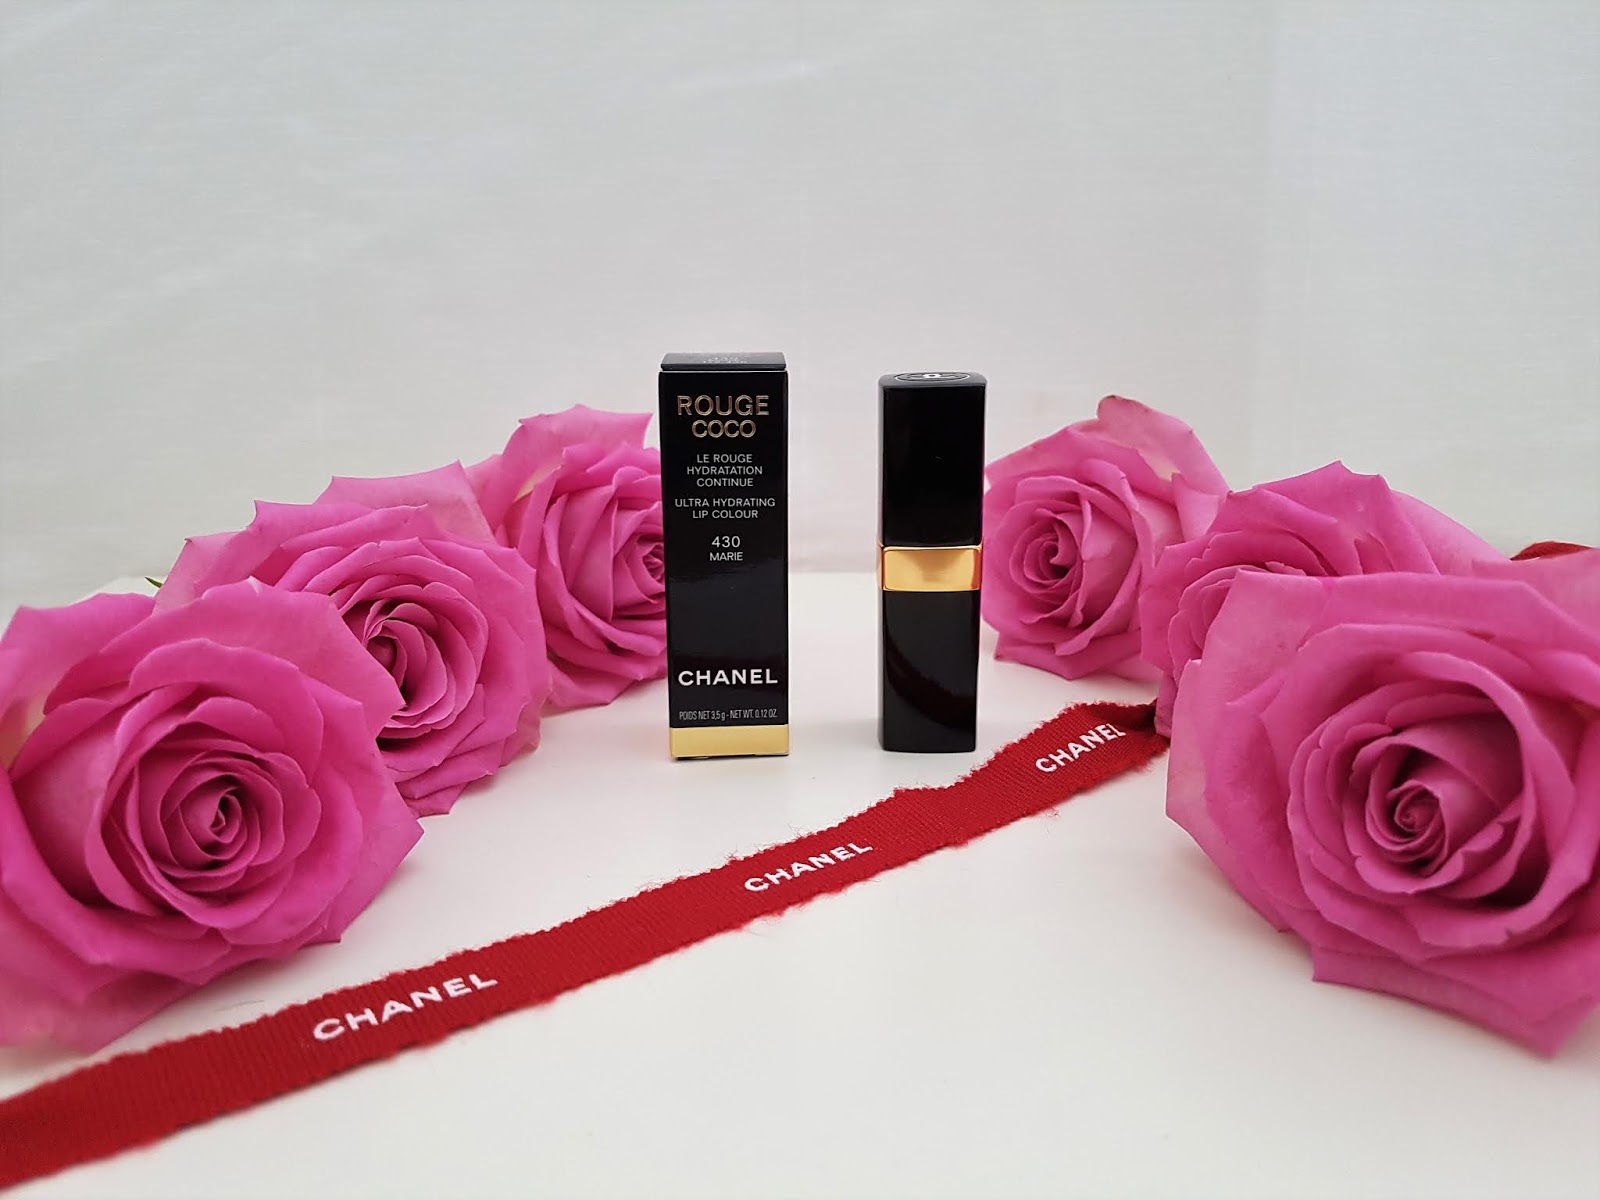 Mua Chanel Rouge Coco Ultra Hydrating Lip Color # 430 Marie Lipstick for  Women, 0.12 Ounce trên  Mỹ chính hãng 2023